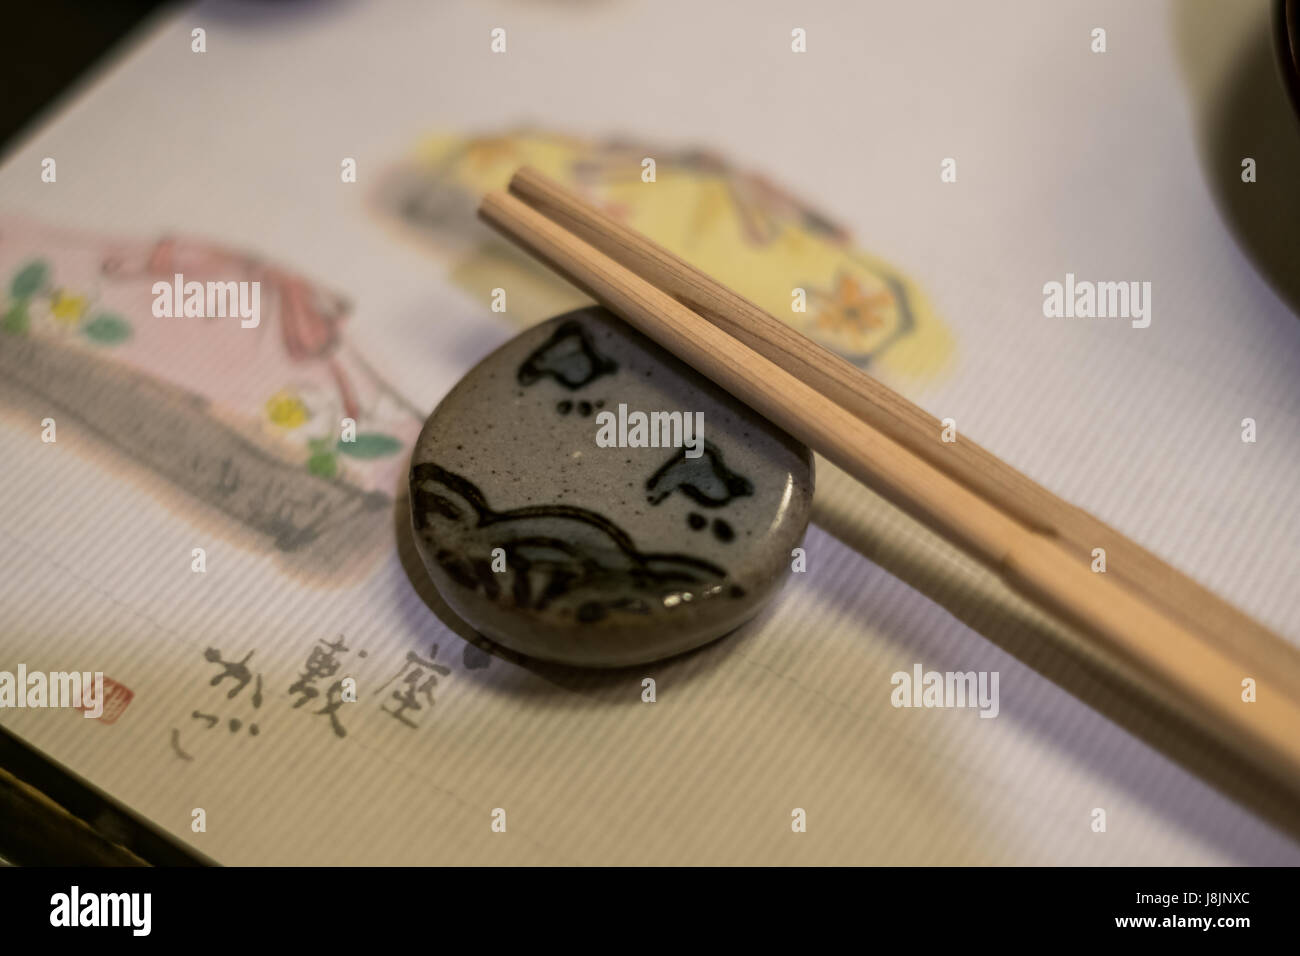 Japanese handmade chopstick holder. Stock Photo